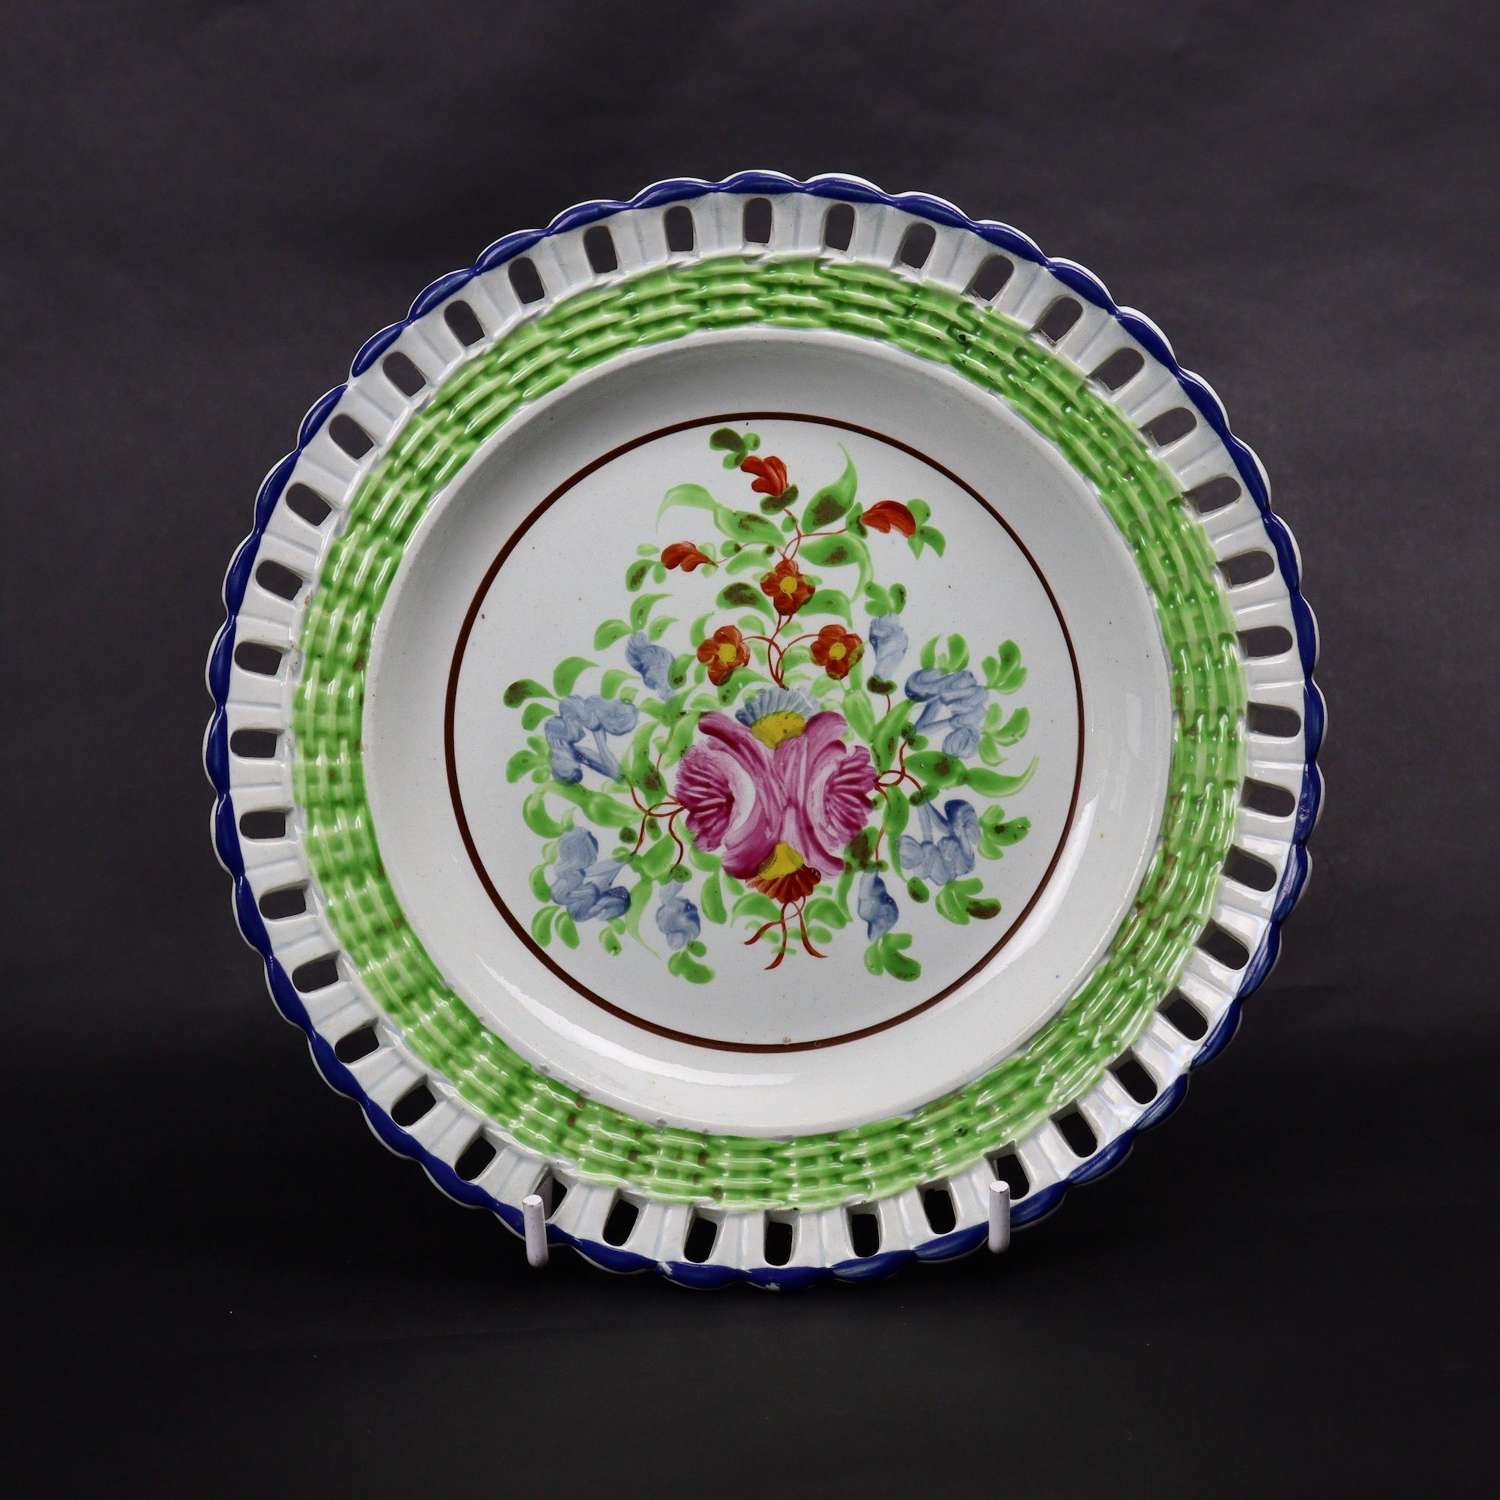 Glamorgan Pottery Plate